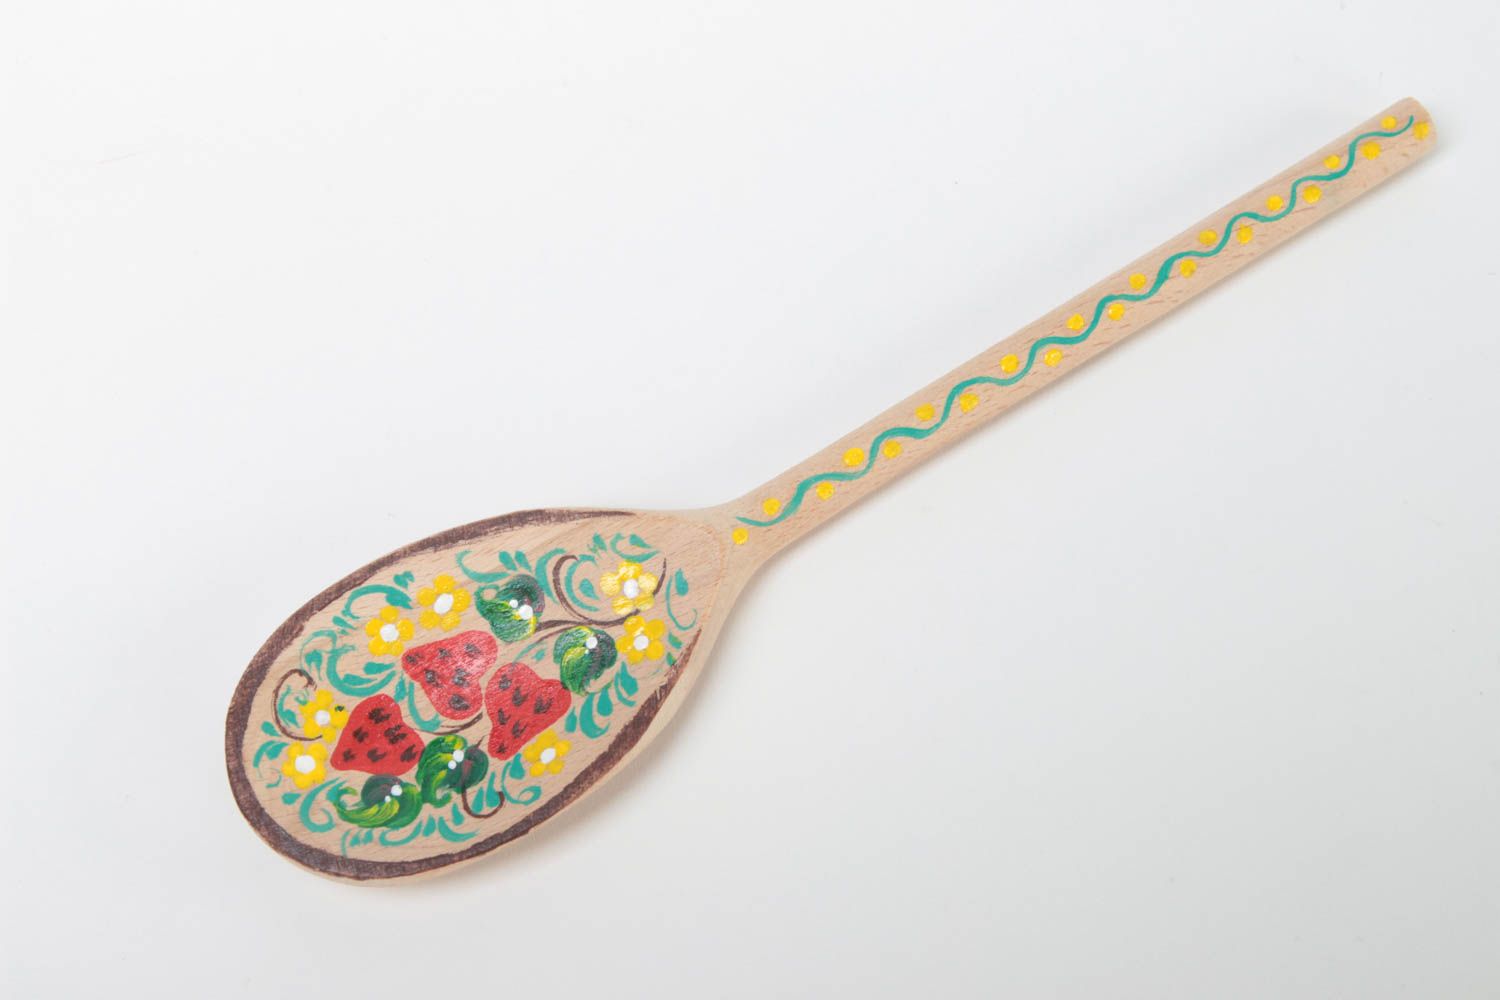 Handmade spoon wooden cutlery unusual gift decorating ideas kitchen accessories photo 2